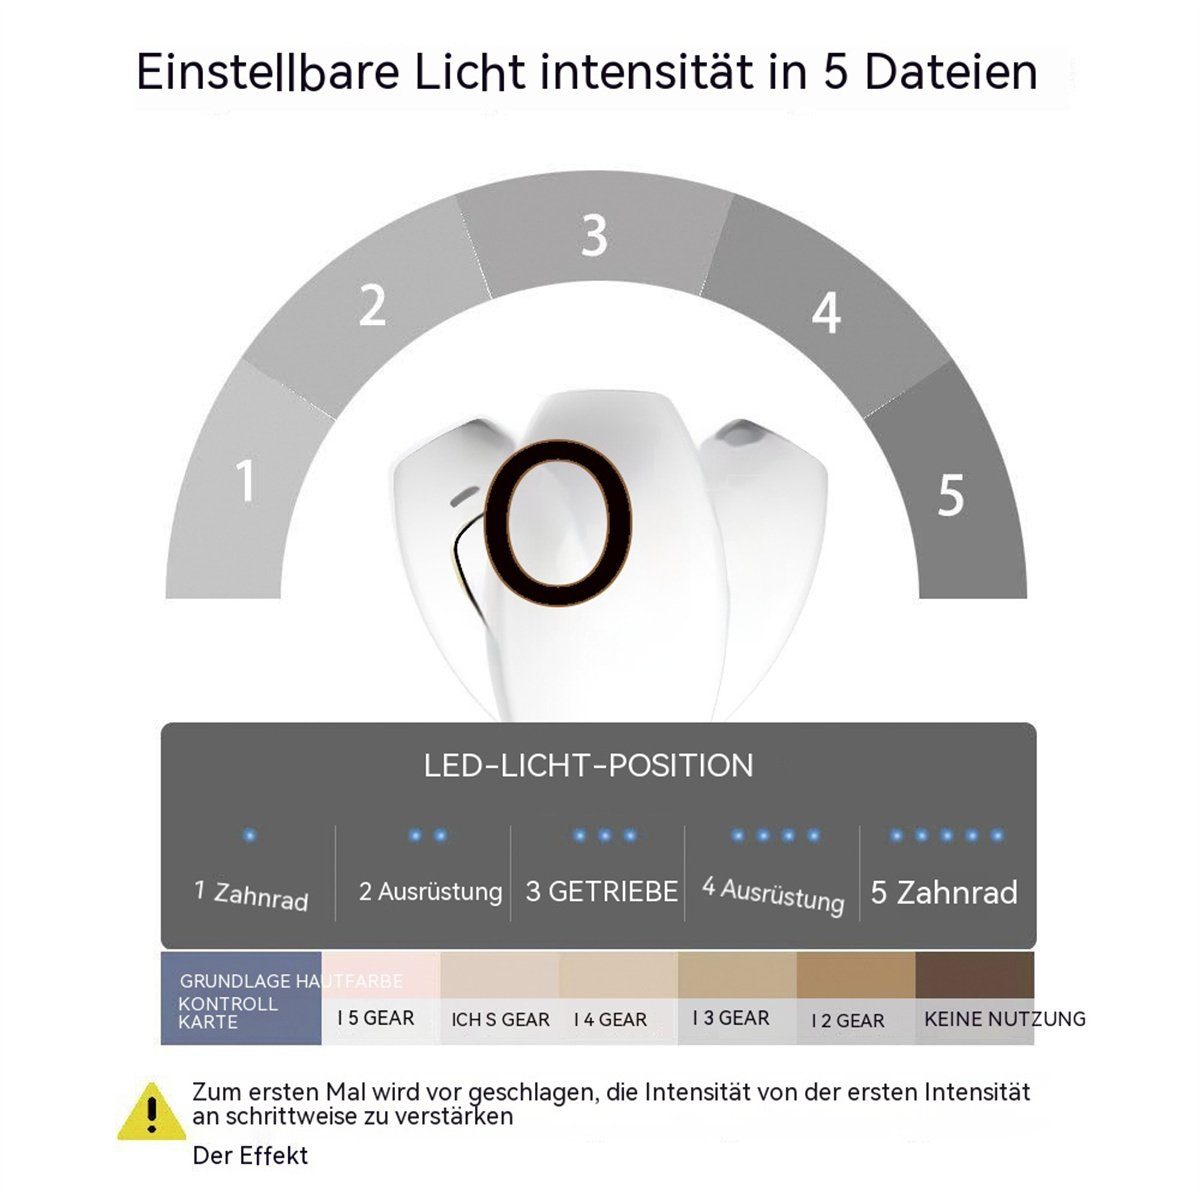 carefully selected IPL-Haarentferner Schmerzlose Laser-Haarentfernung, Unisex Weiß Haarentfernungsgerät